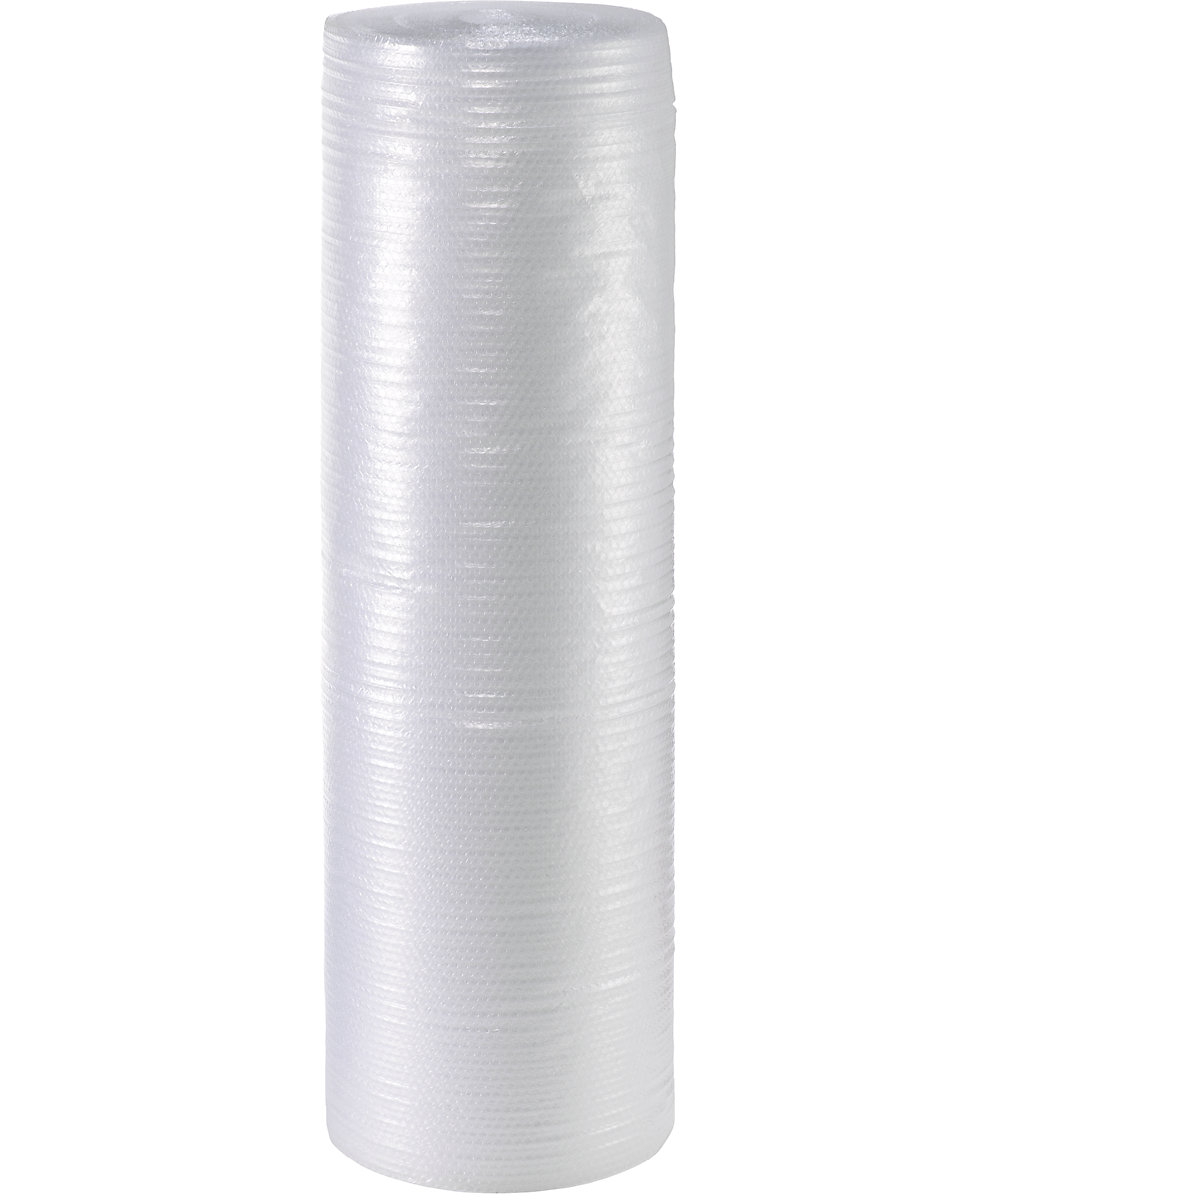 Bubble wrap film, 2-ply – eurokraft basic, film thickness 50 µm, width 1500 mm, 5+ items-2